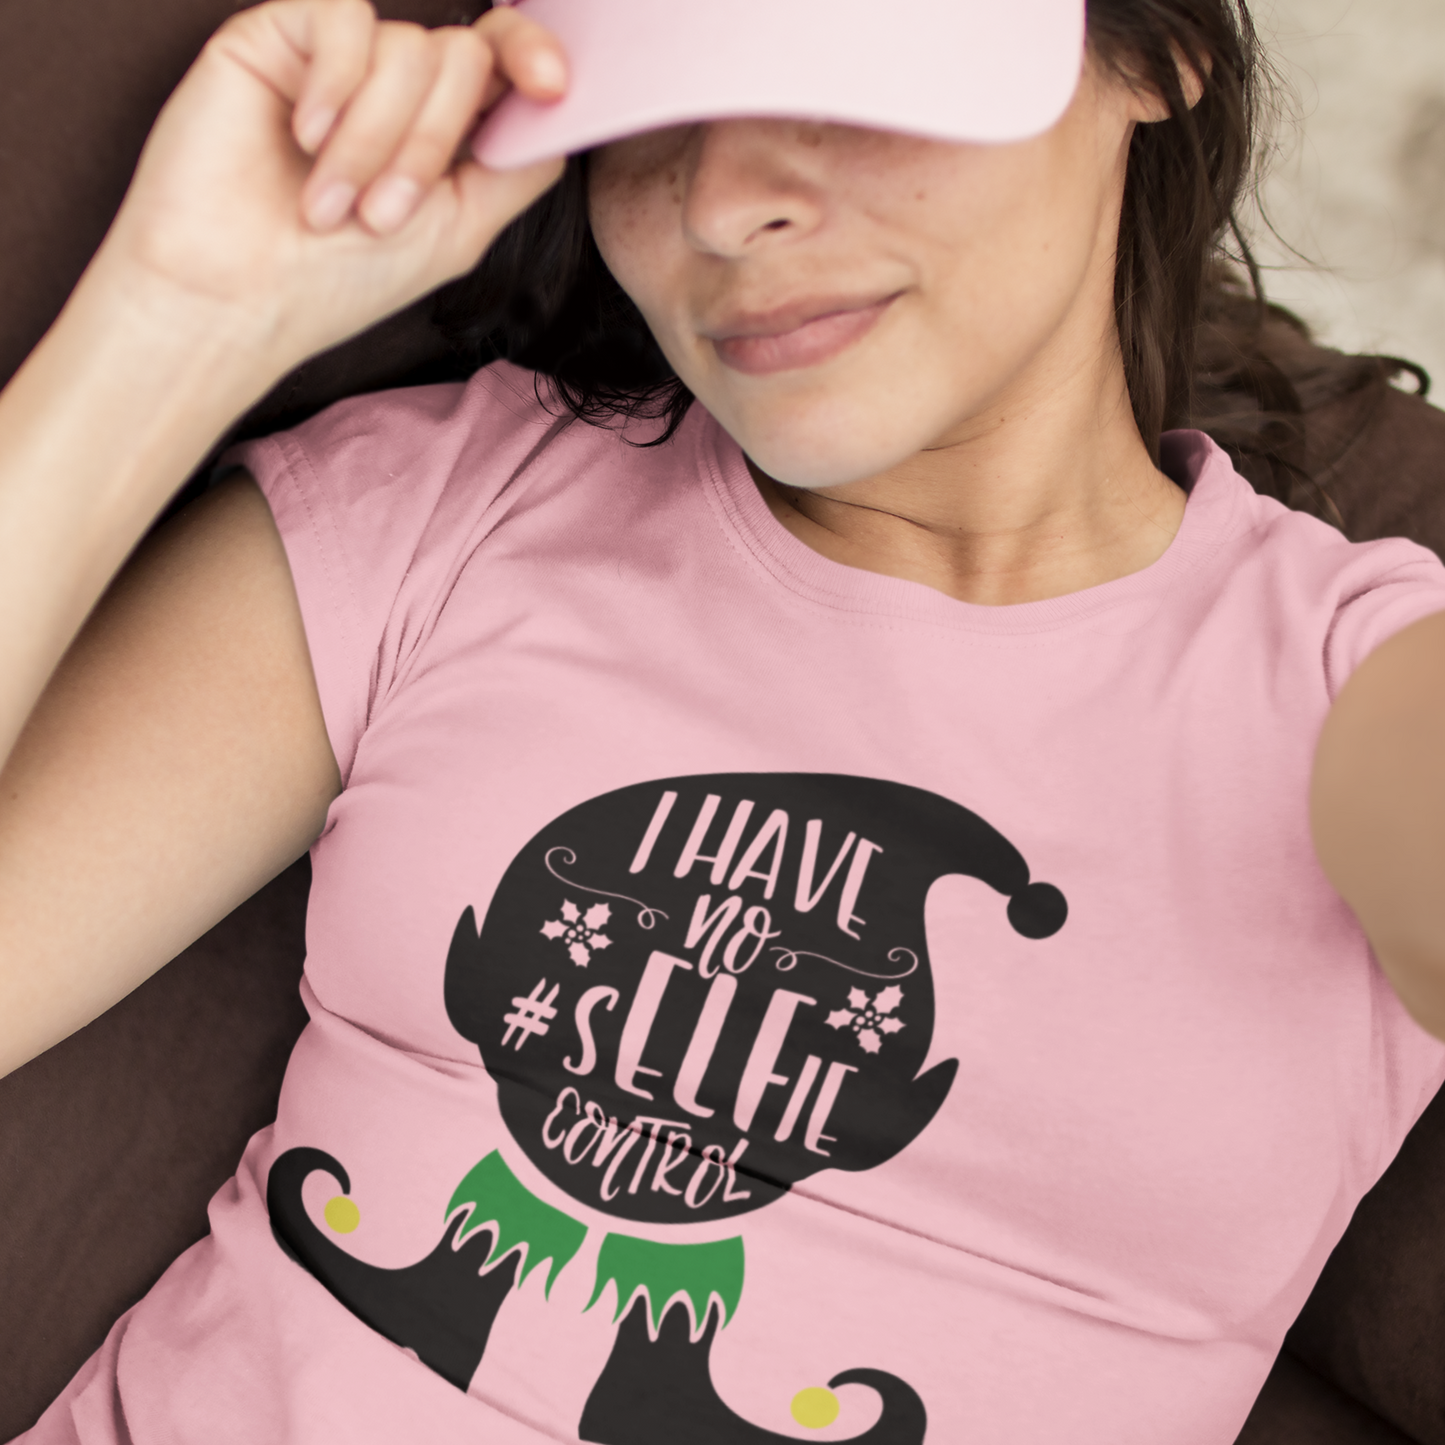 No Selfie Control Women's Relaxed T-Shirt